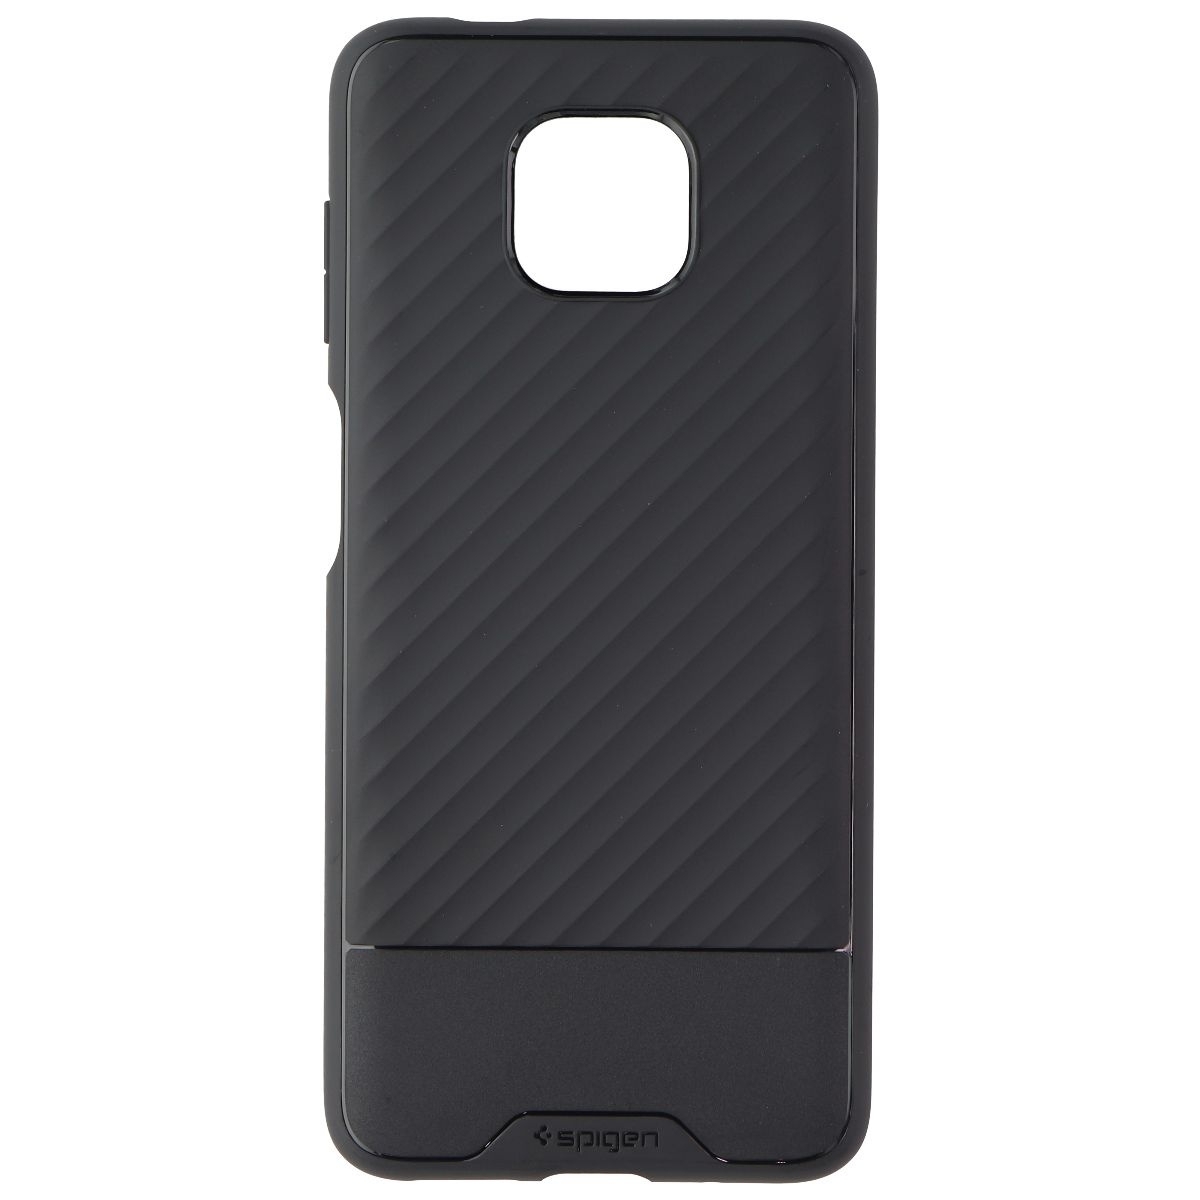 Spigen Core Armor Series Case For Moto G Power (2021) Smartphones - Black